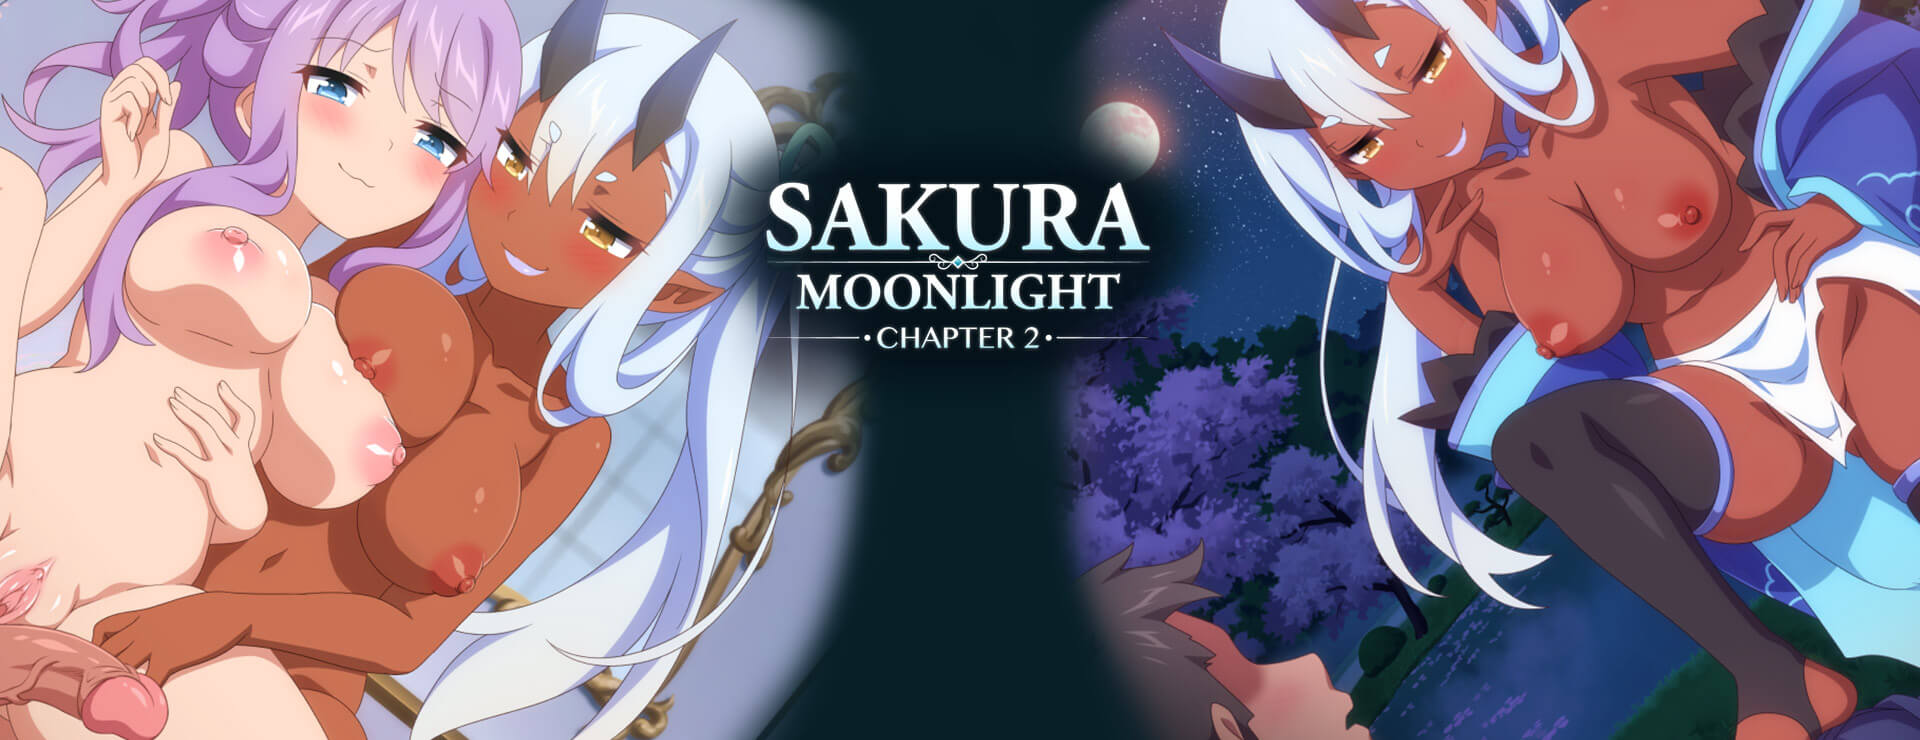 Sakura Moonlight Chapter 2 - Novela Visual Juego